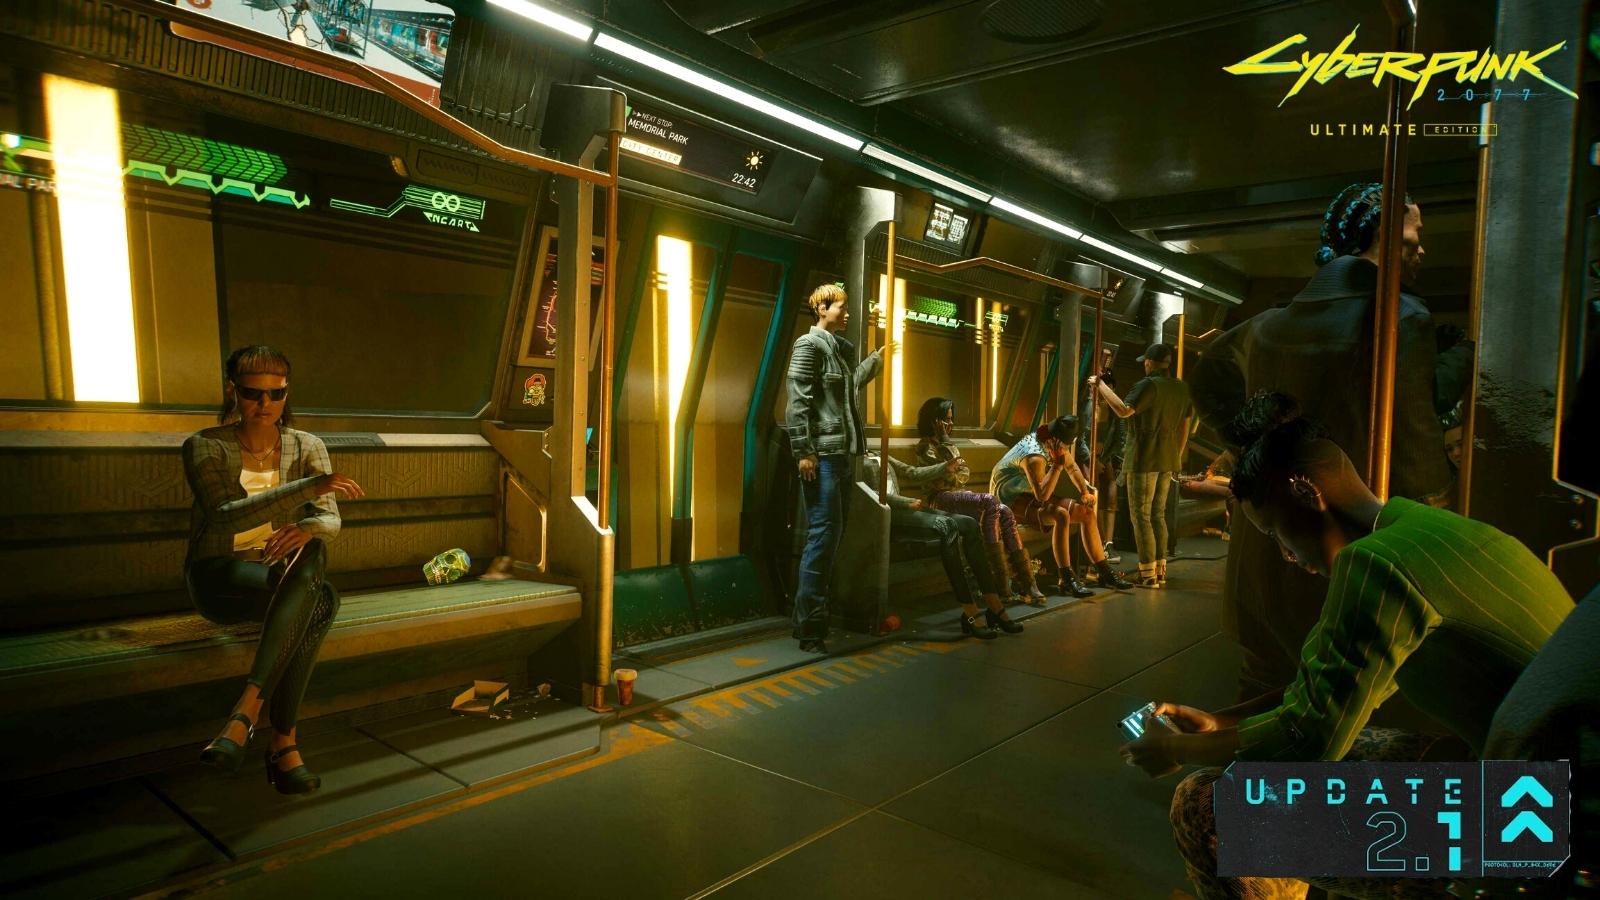 NCART Train Ride in Night City in Cyberpunk 2077